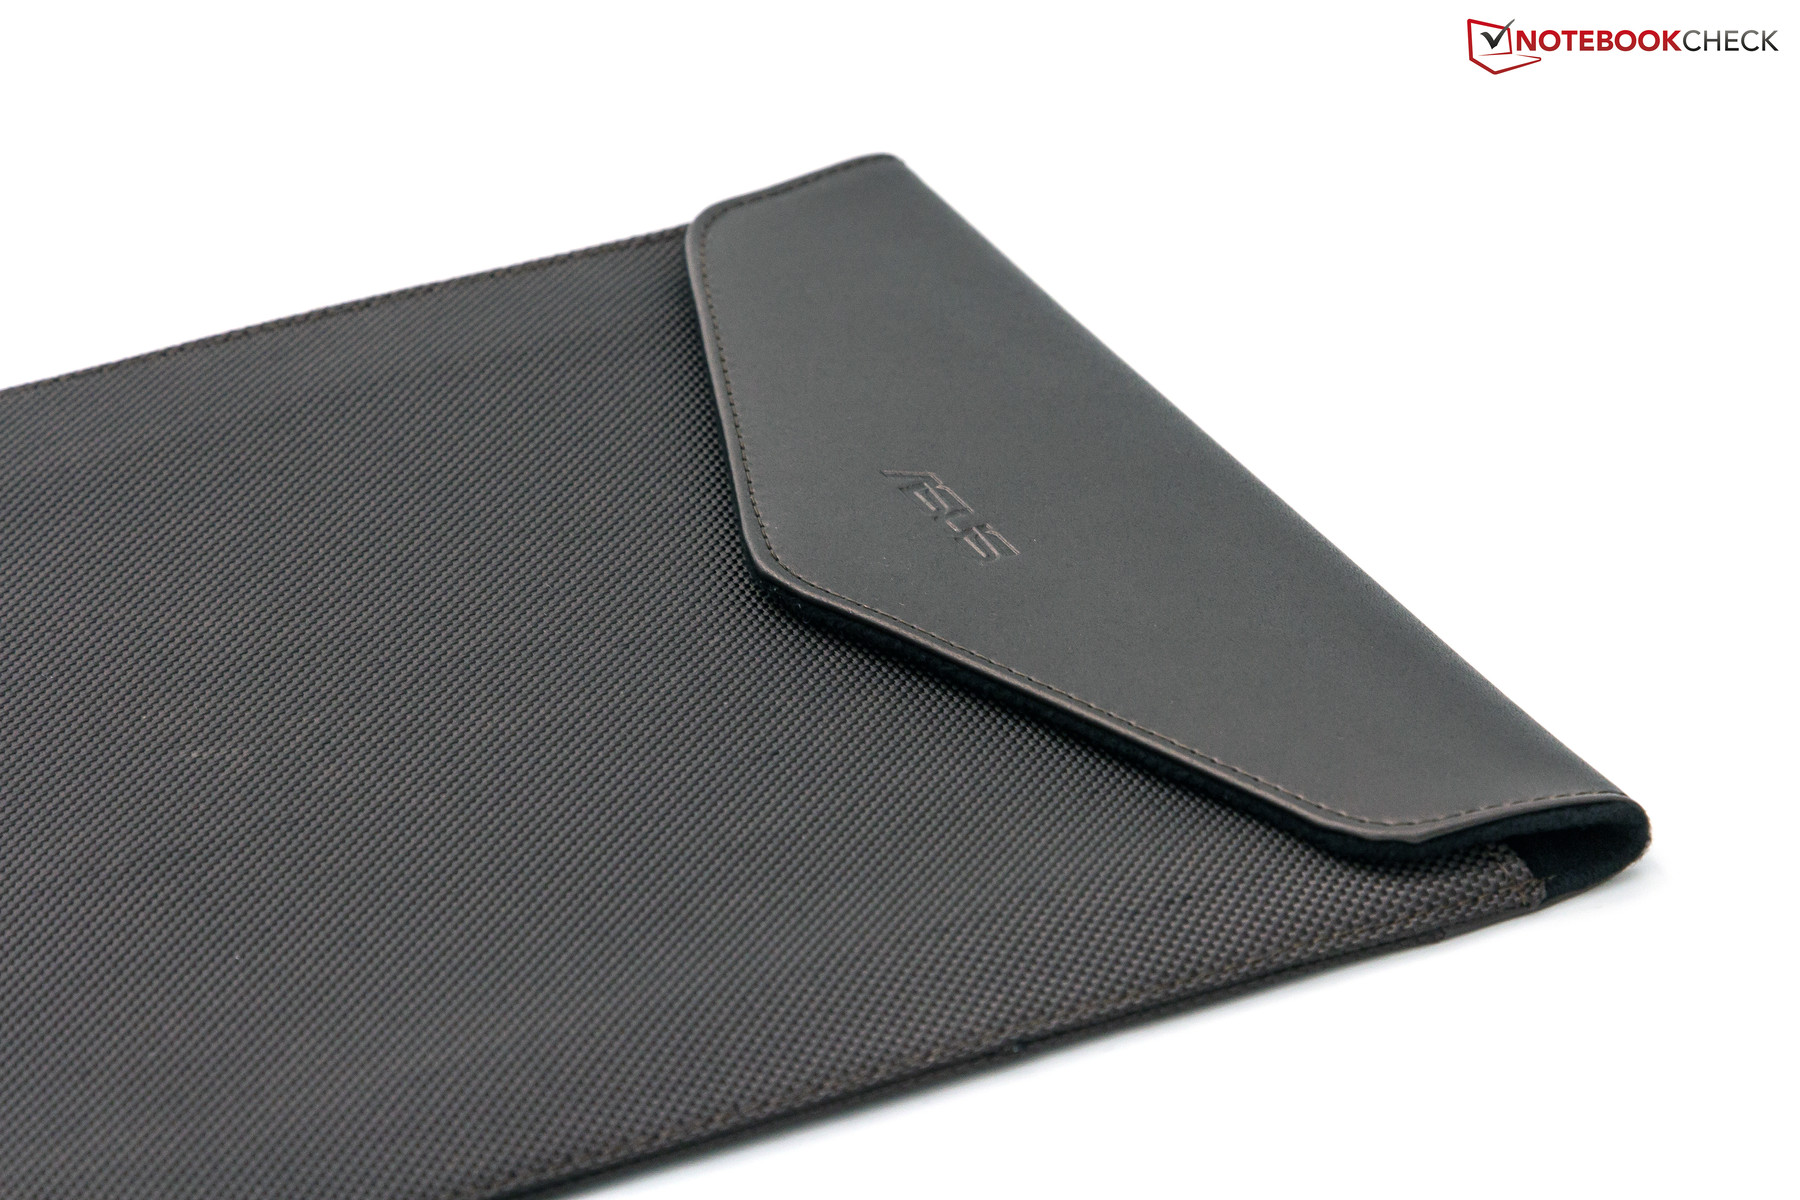 Review Asus Zenbook Prime UX21A Ultrabook - NotebookCheck.net Reviews